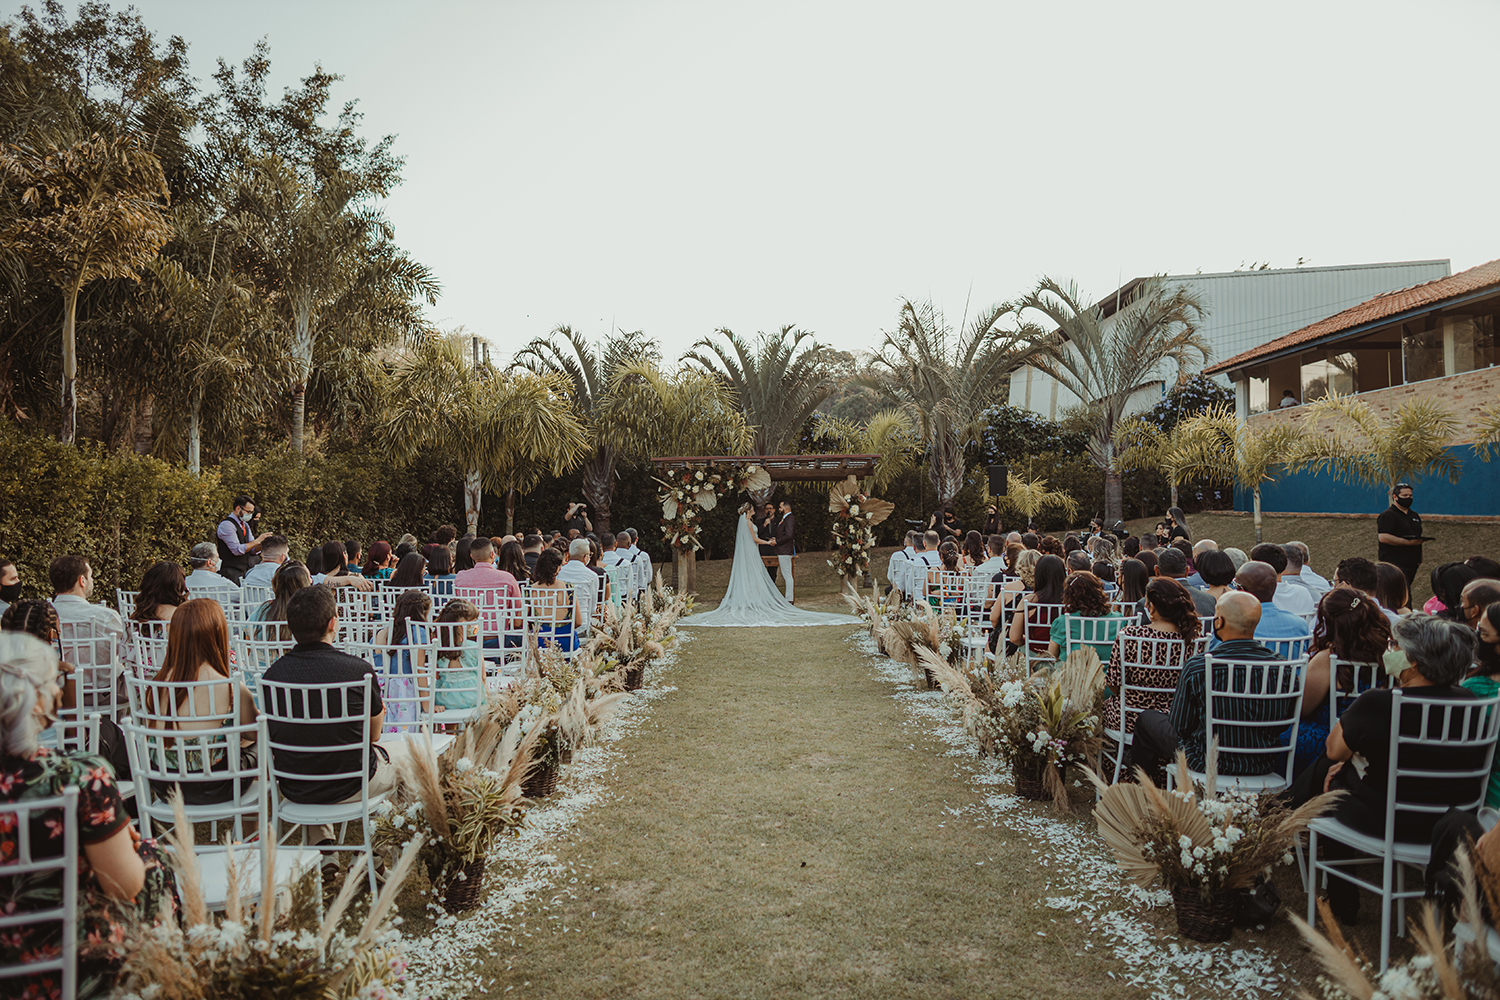 Darfiny e Lucas | Casamento romântico na Vilabella Eventos